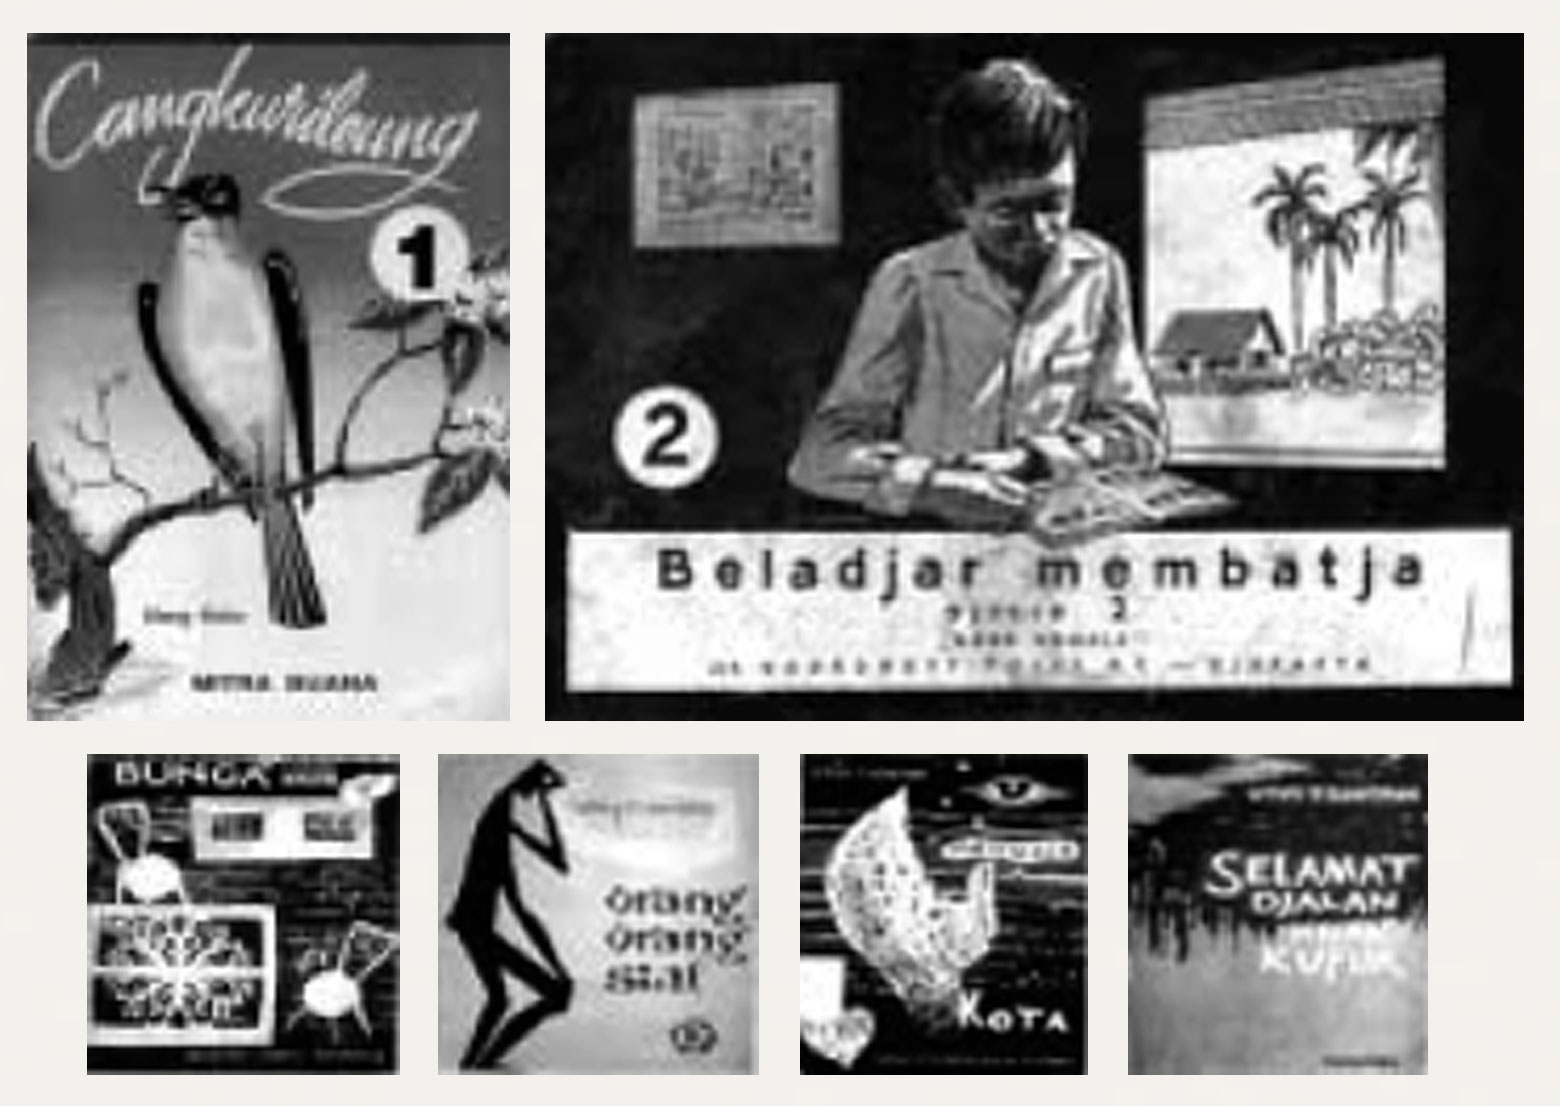 Gambar 8. (a) Kulit muka buku "Cangkurileung" digambar oleh Nanang Durachman tahun 1960-an, dicetak ulang hingga lima kali; (b) Kulit muka buku "Beladjar Membatja" untuk siswa sekolah dasar dicetak tahun 1953; (c, d, e & f) Kulit muka sejumlah buku yang terbit tahun 1960 dengan ilustrasi bergaya "Jengki".